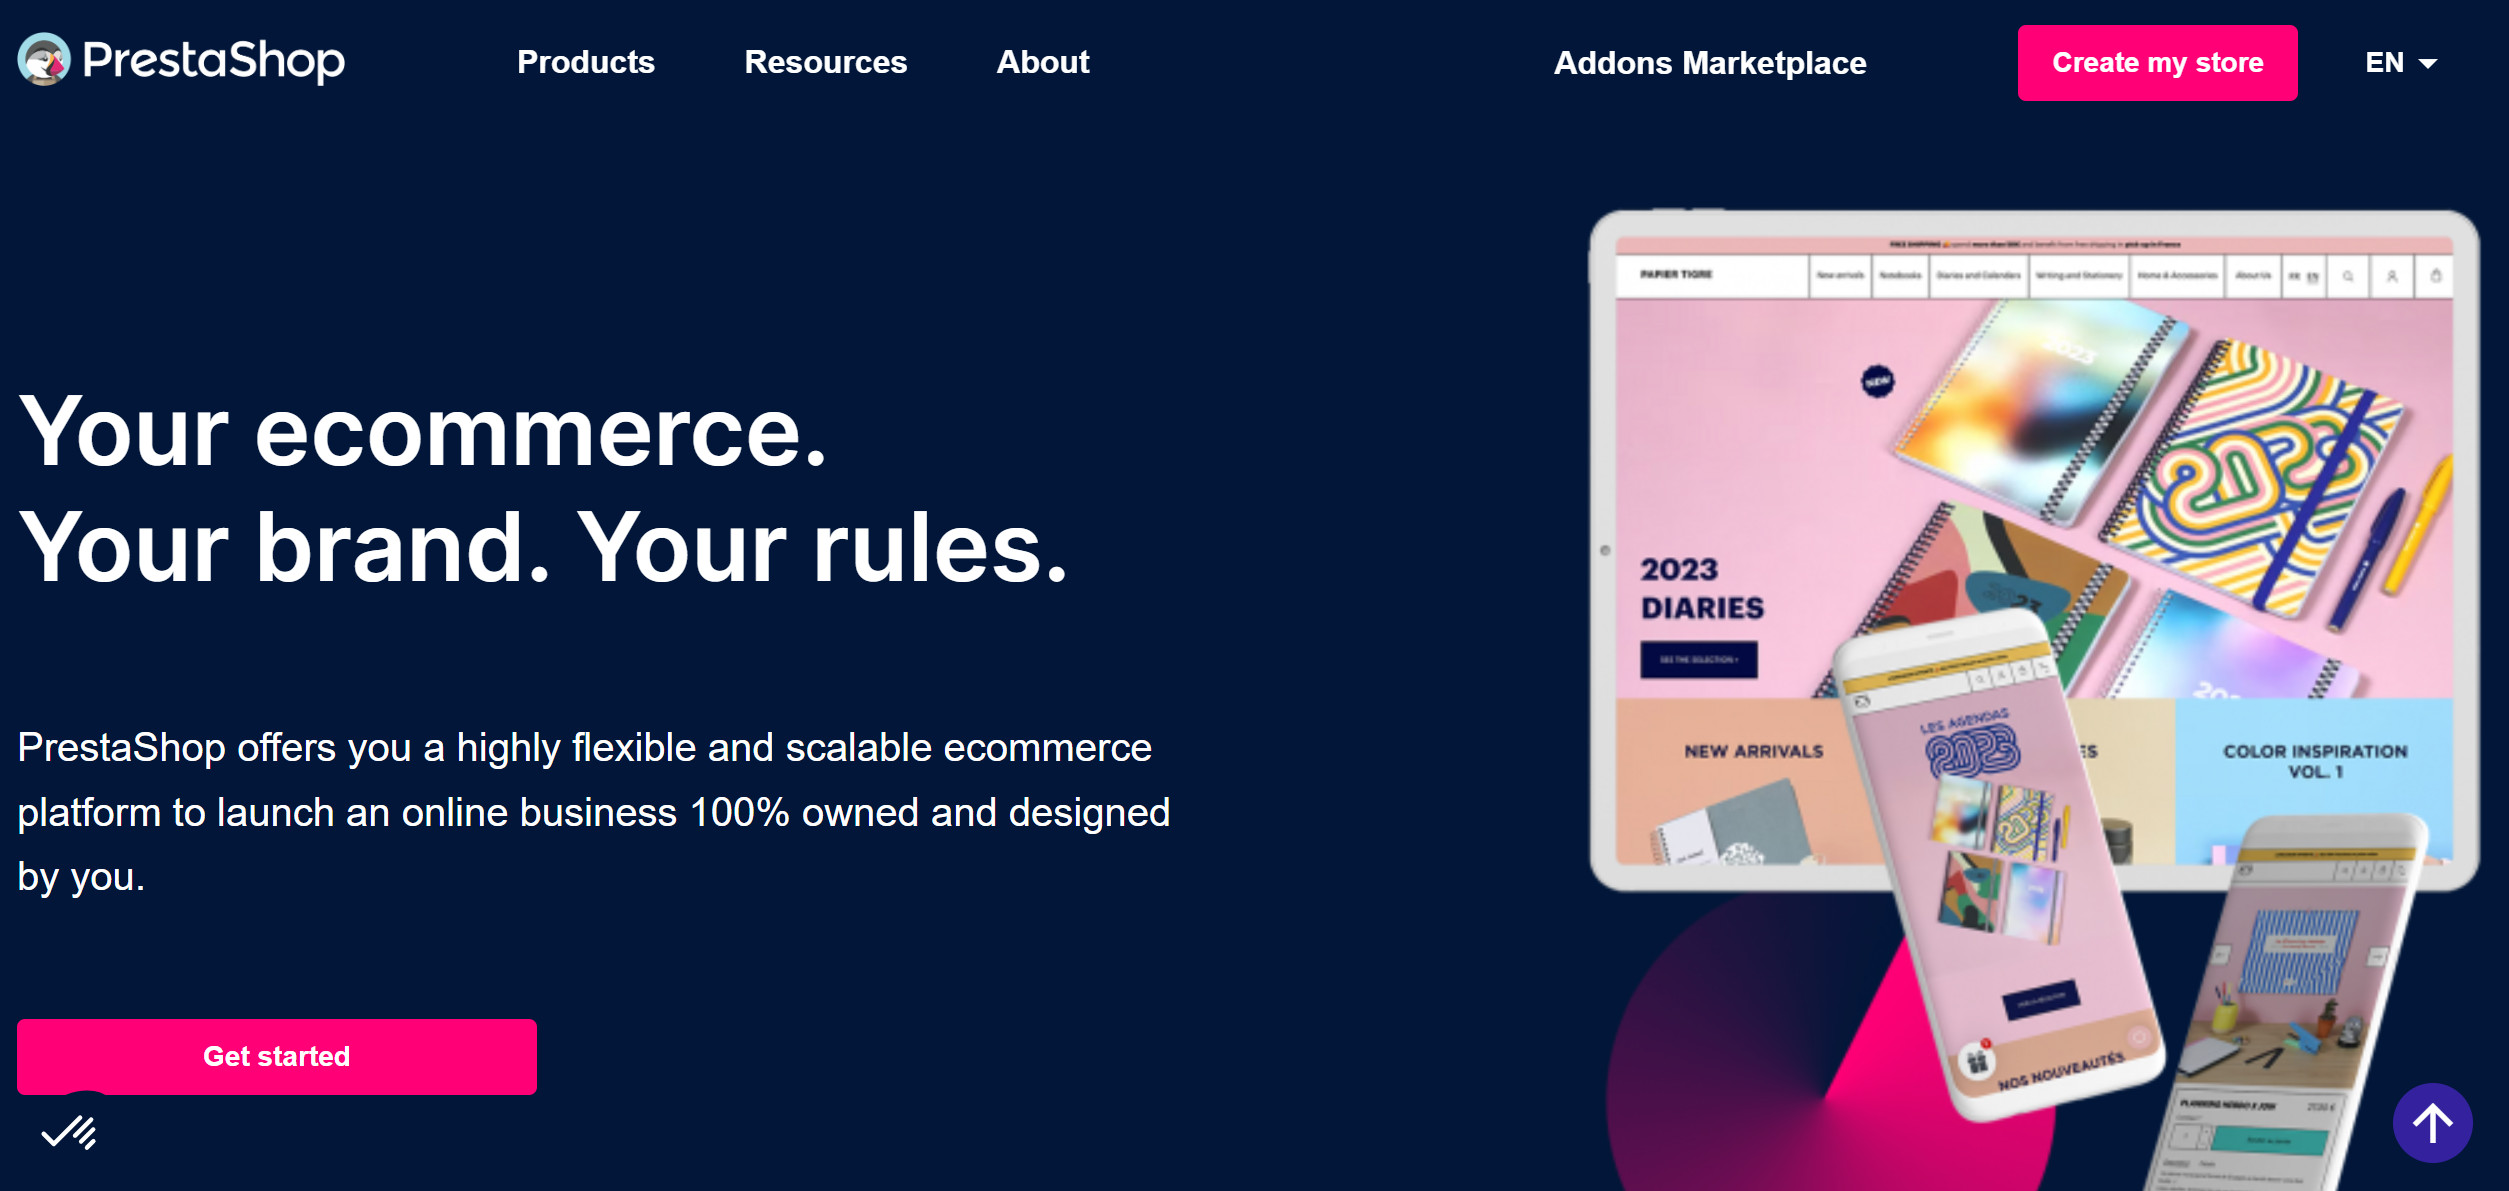 Prestashop - Open source ecommerce platform to build online shopping websites in Singapore